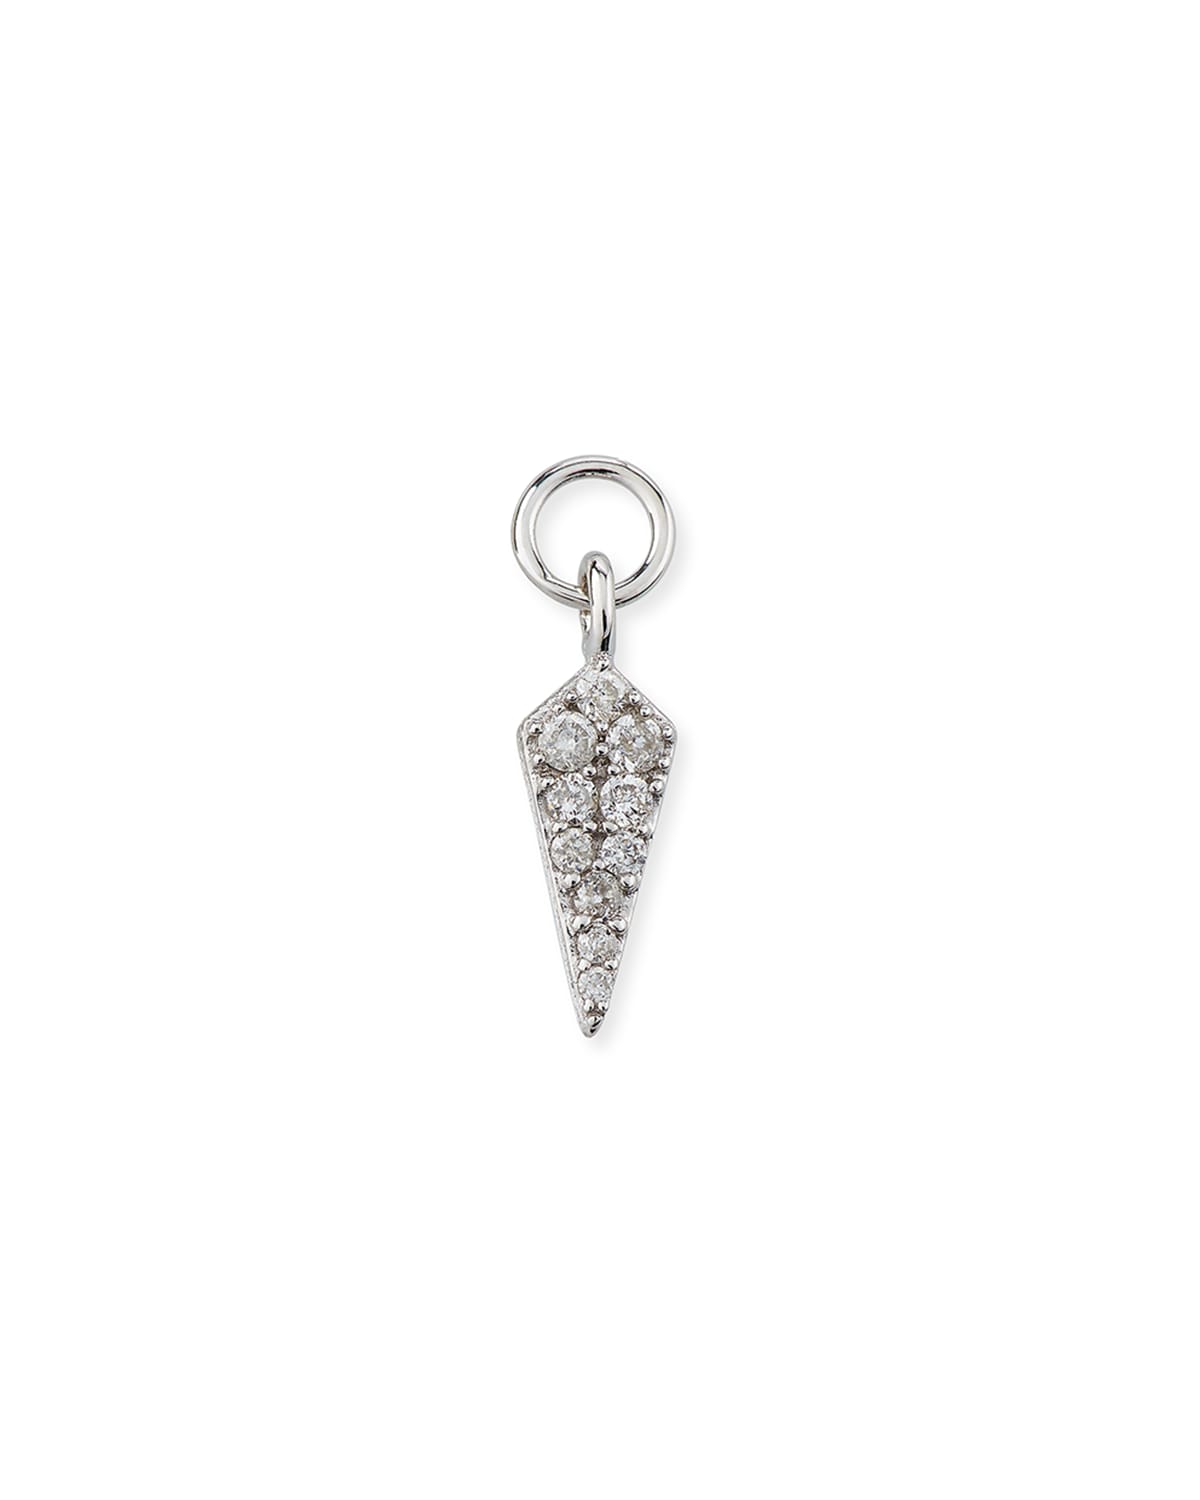 Jude Frances 18k White Gold Petite Diamond Dagger Earring Charm, Single